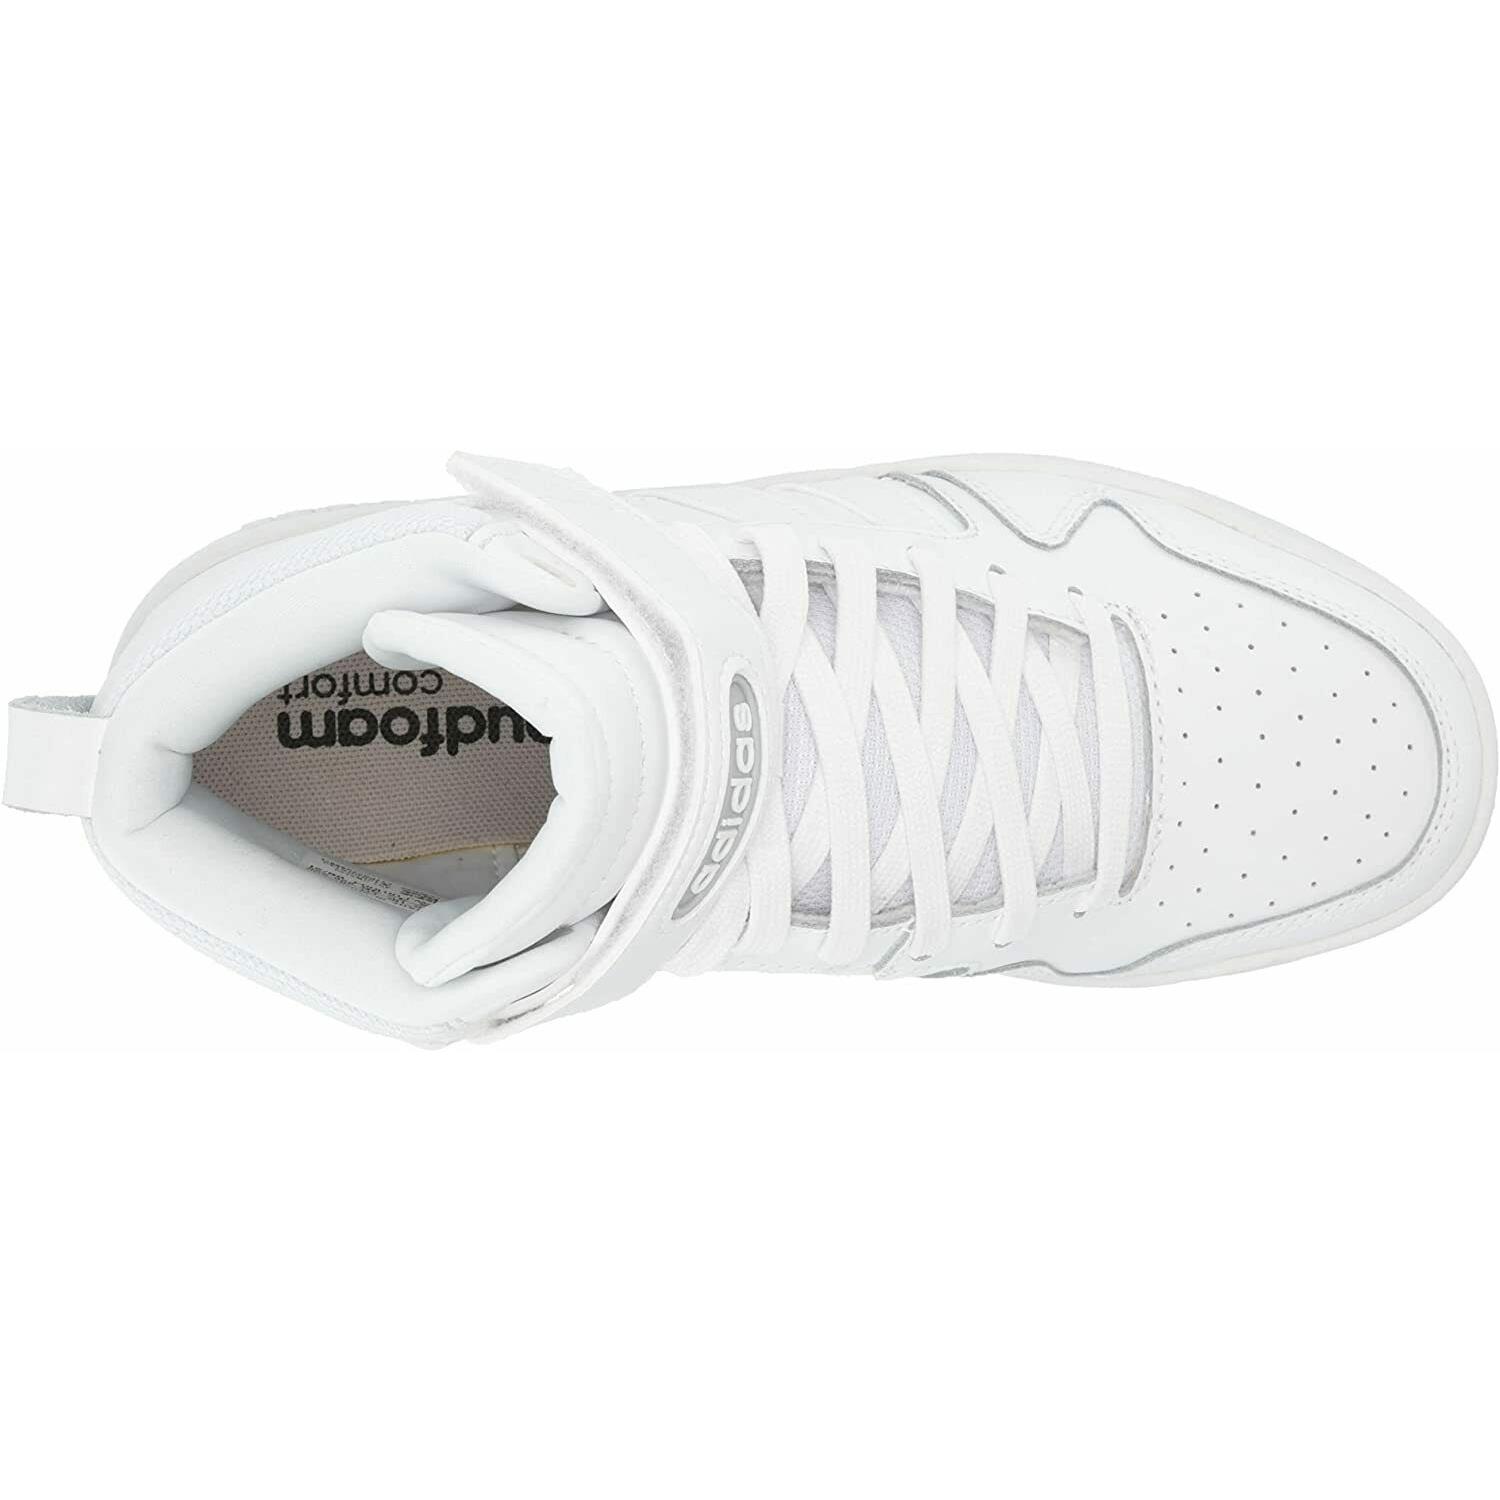 Adidas shoes POSTMOVE - White 4